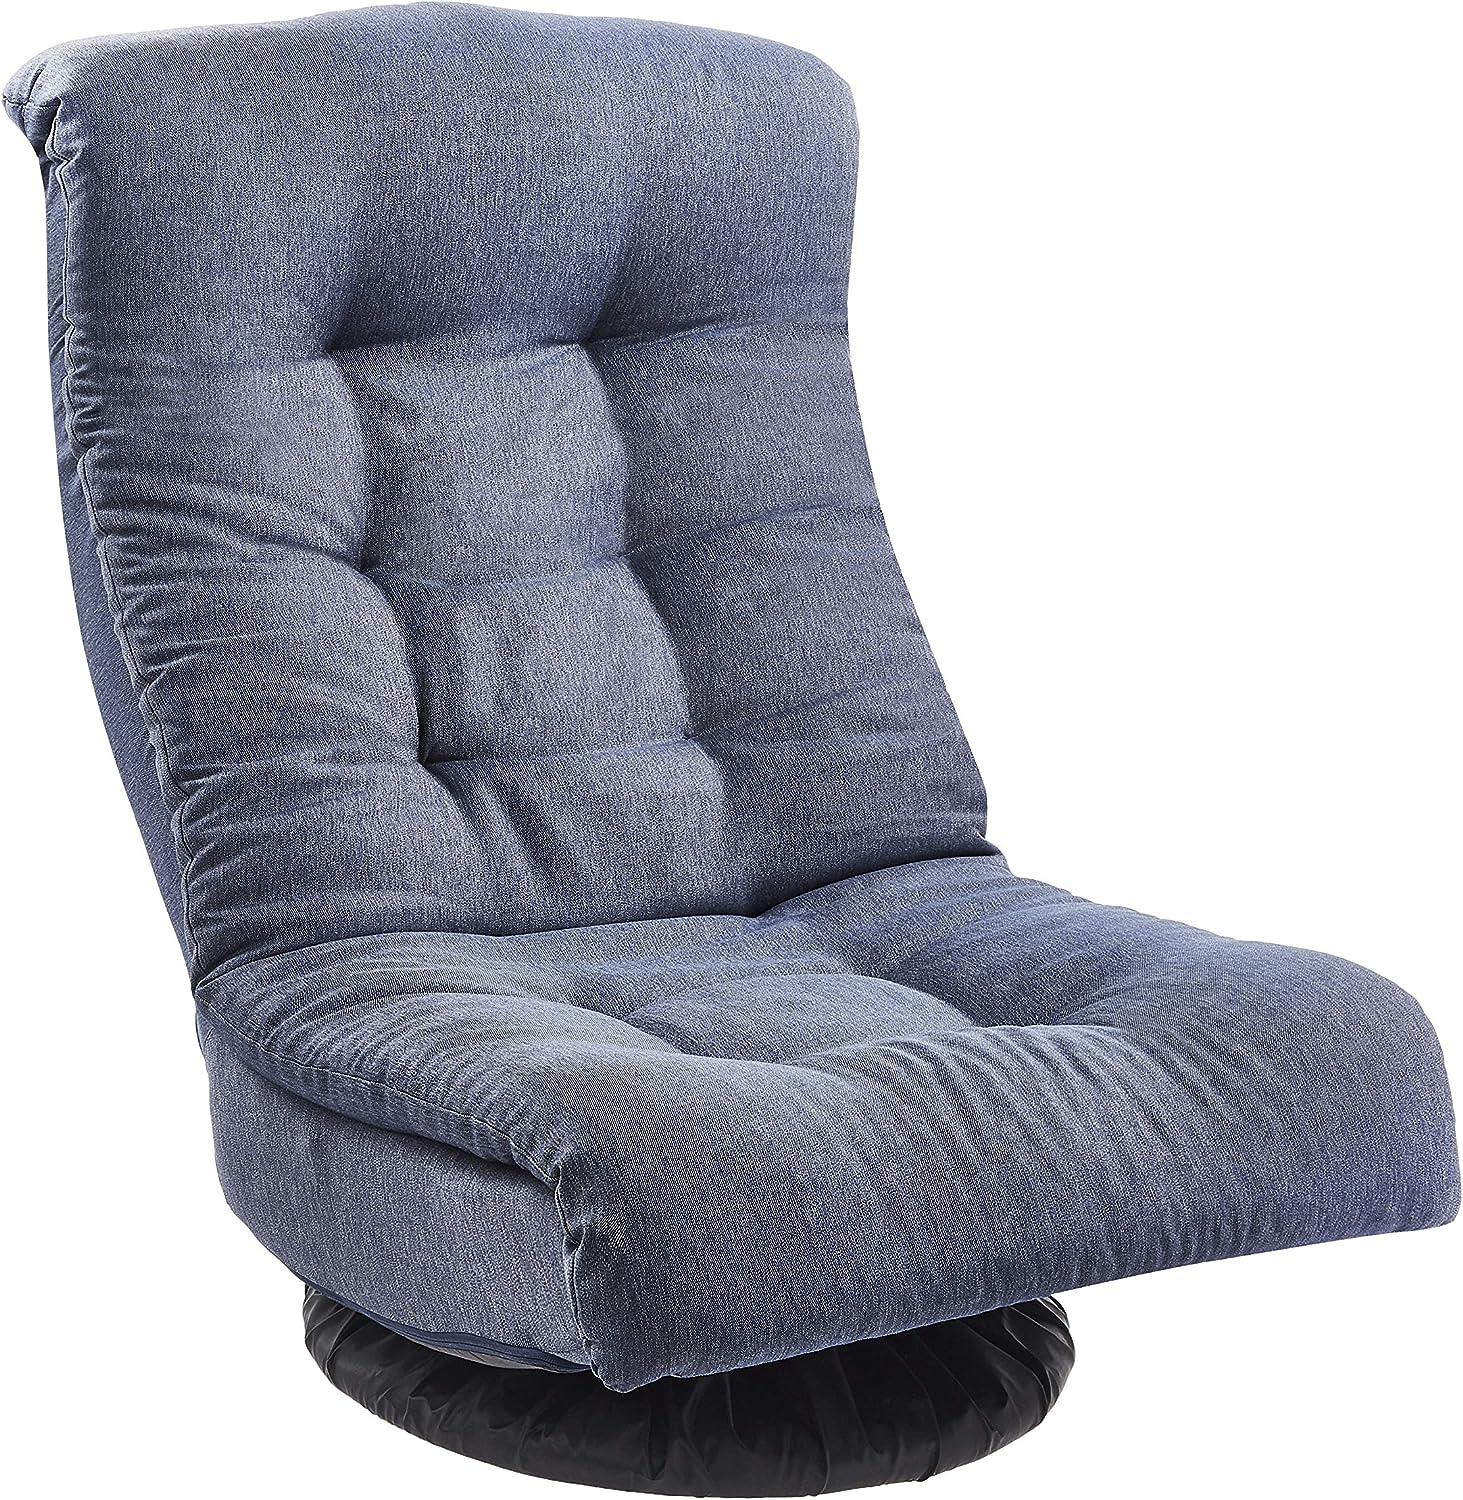 Amazon Basics Swivel Foam Lounge Chair - with Headrest, Adjustable, Denim, Blue, 26.3D x 23.5W x 13.7H in